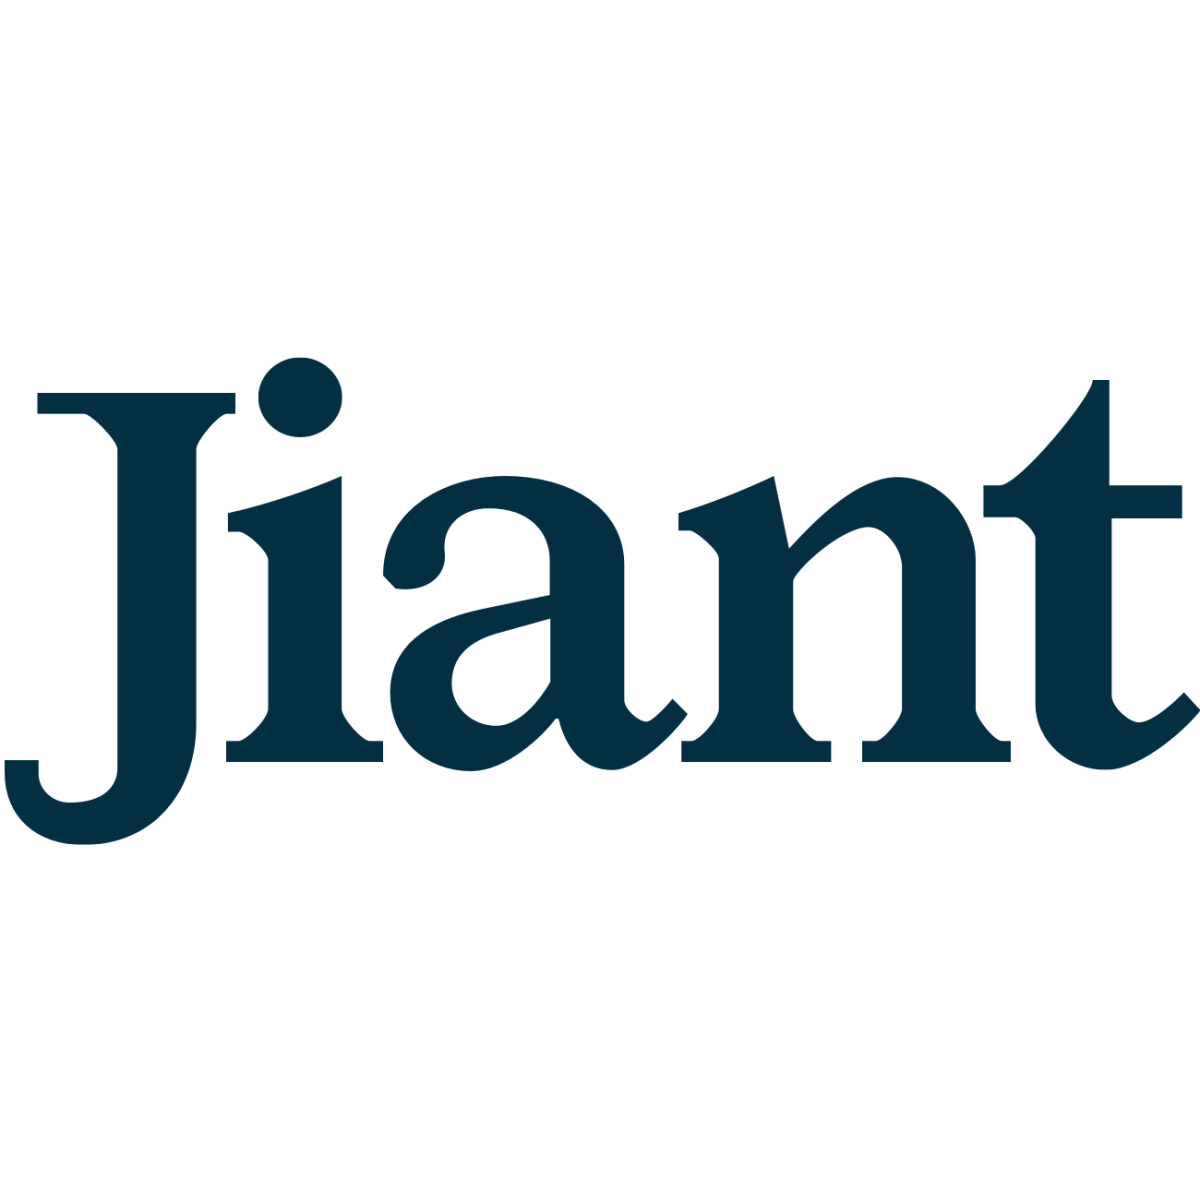 Jiant_logo.png